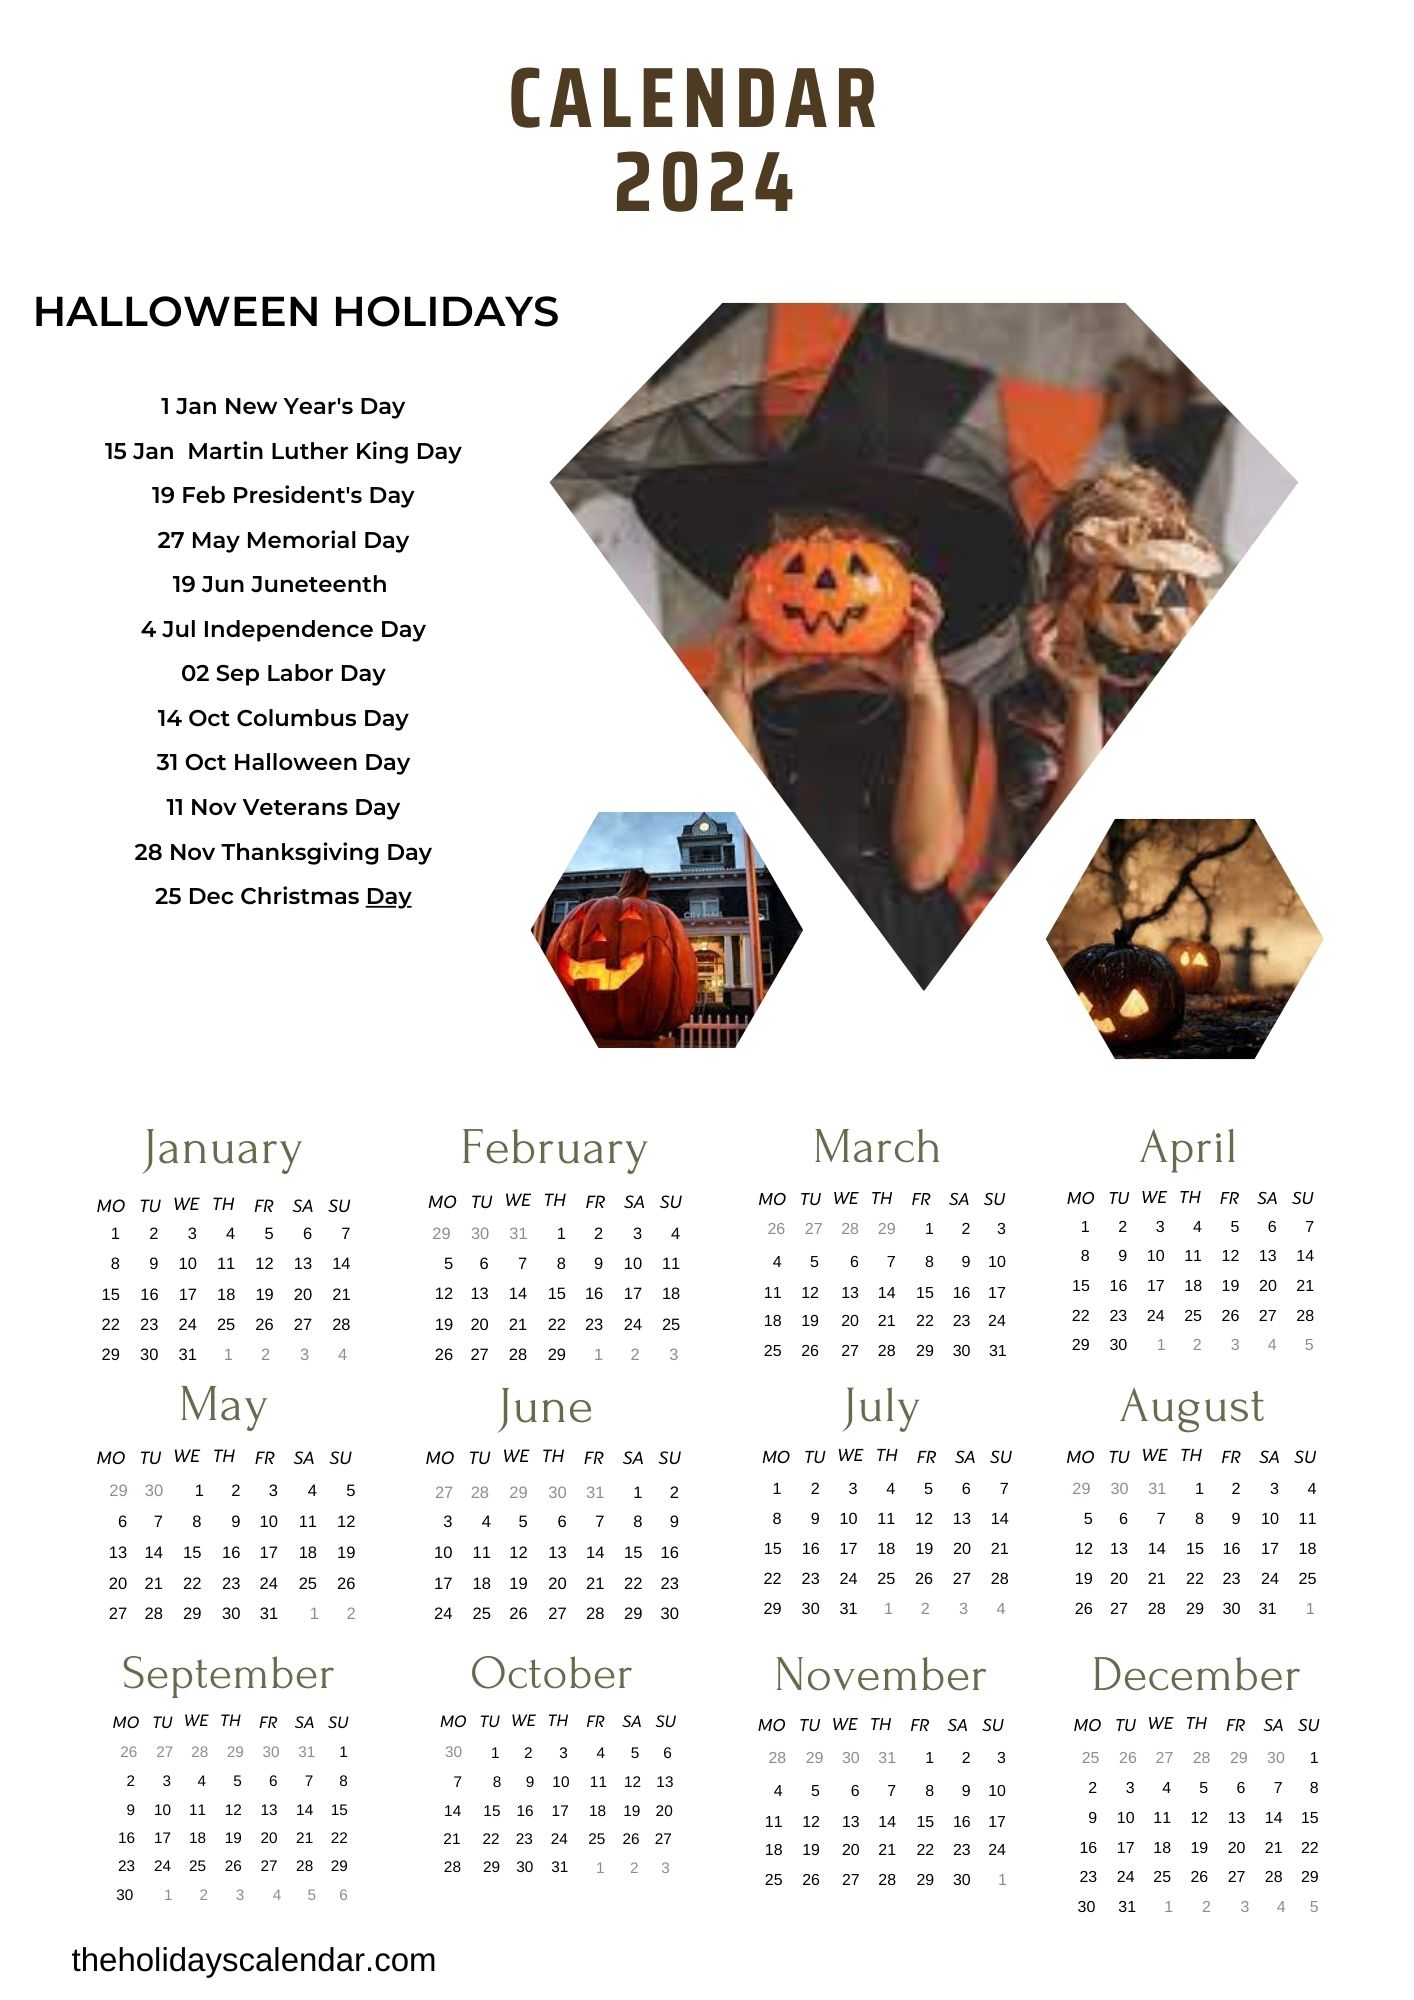 Halloween Holiday 2024 [Countdown Calendar with Holidays]